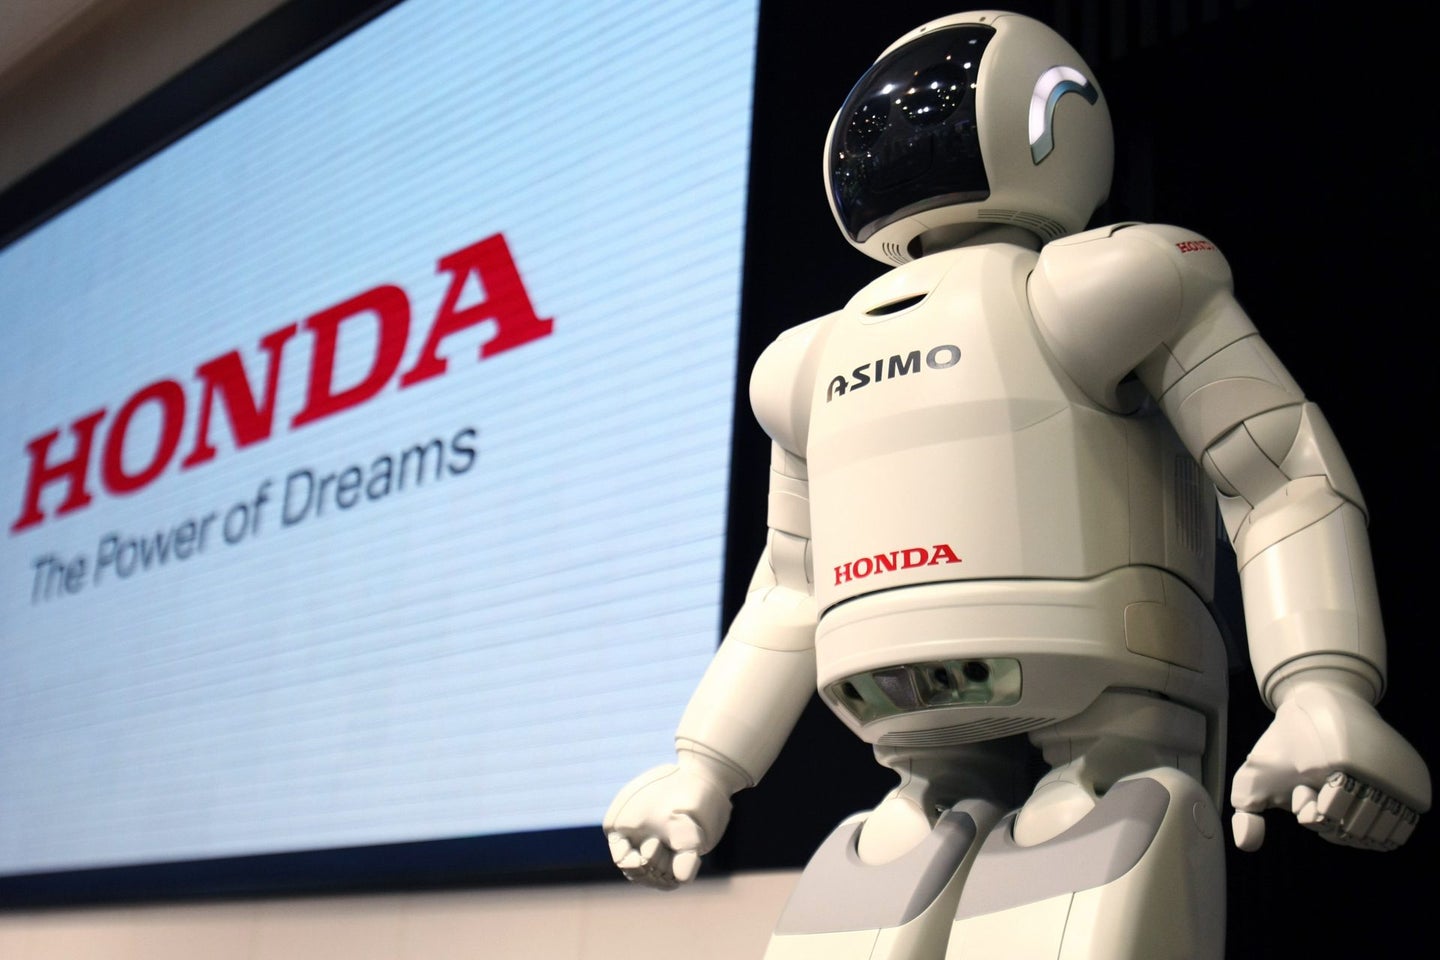 Honda Ends Development of ASIMO Robot